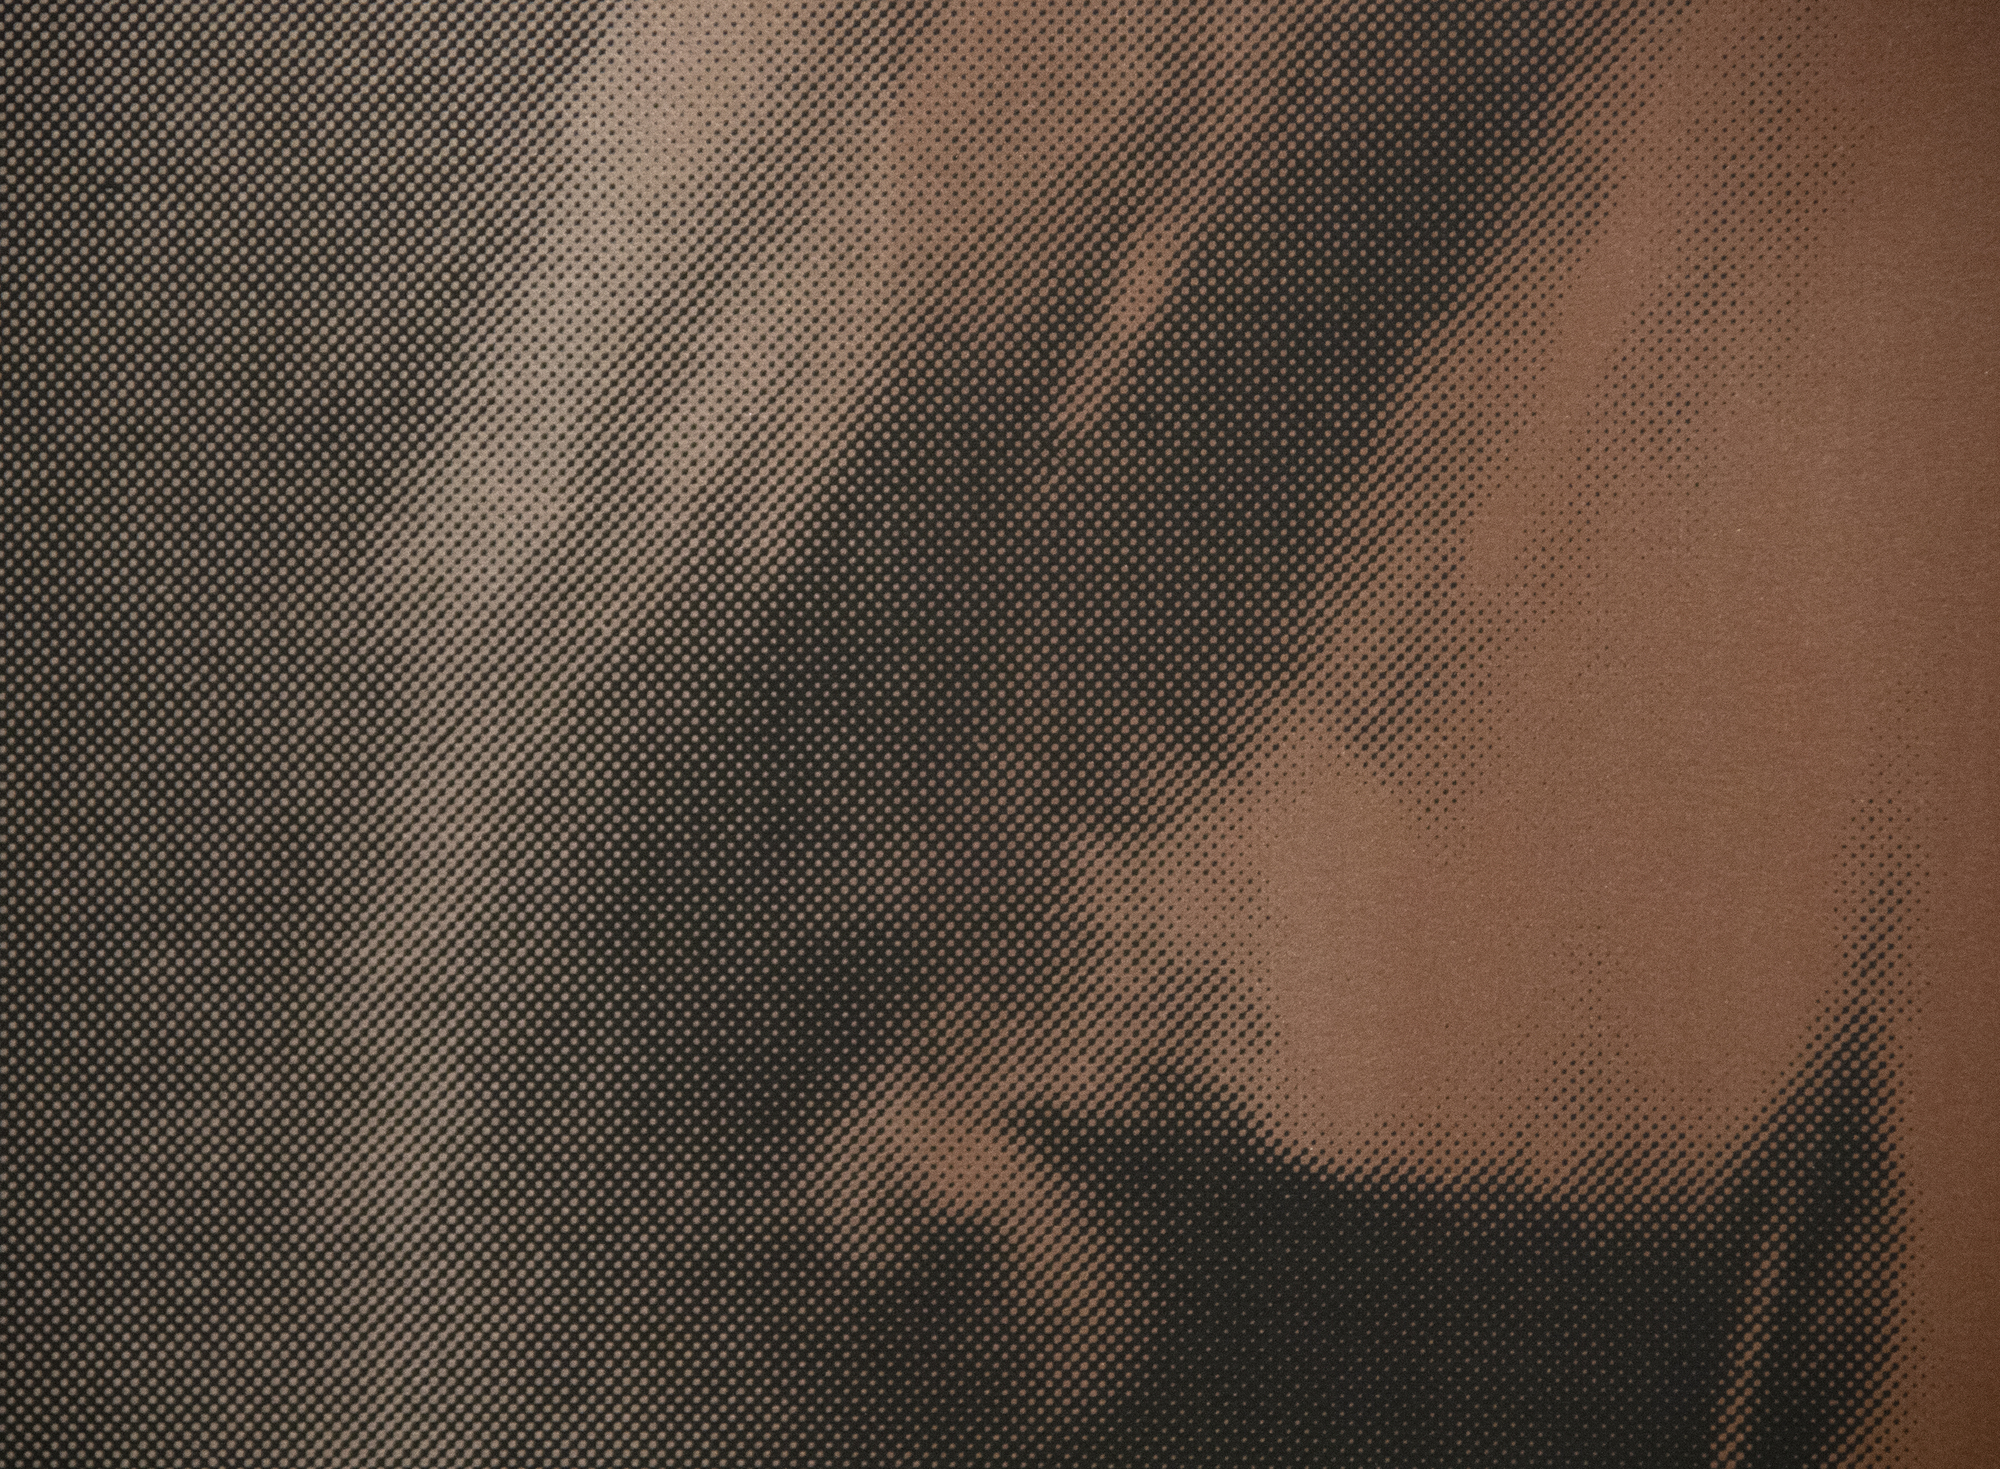 ANDY WARHOL - The Shadow (神話より) - 紙にダイヤモンドダスト入りカラースクリーンプリント - 37 1/2 x 37 1/2 in.